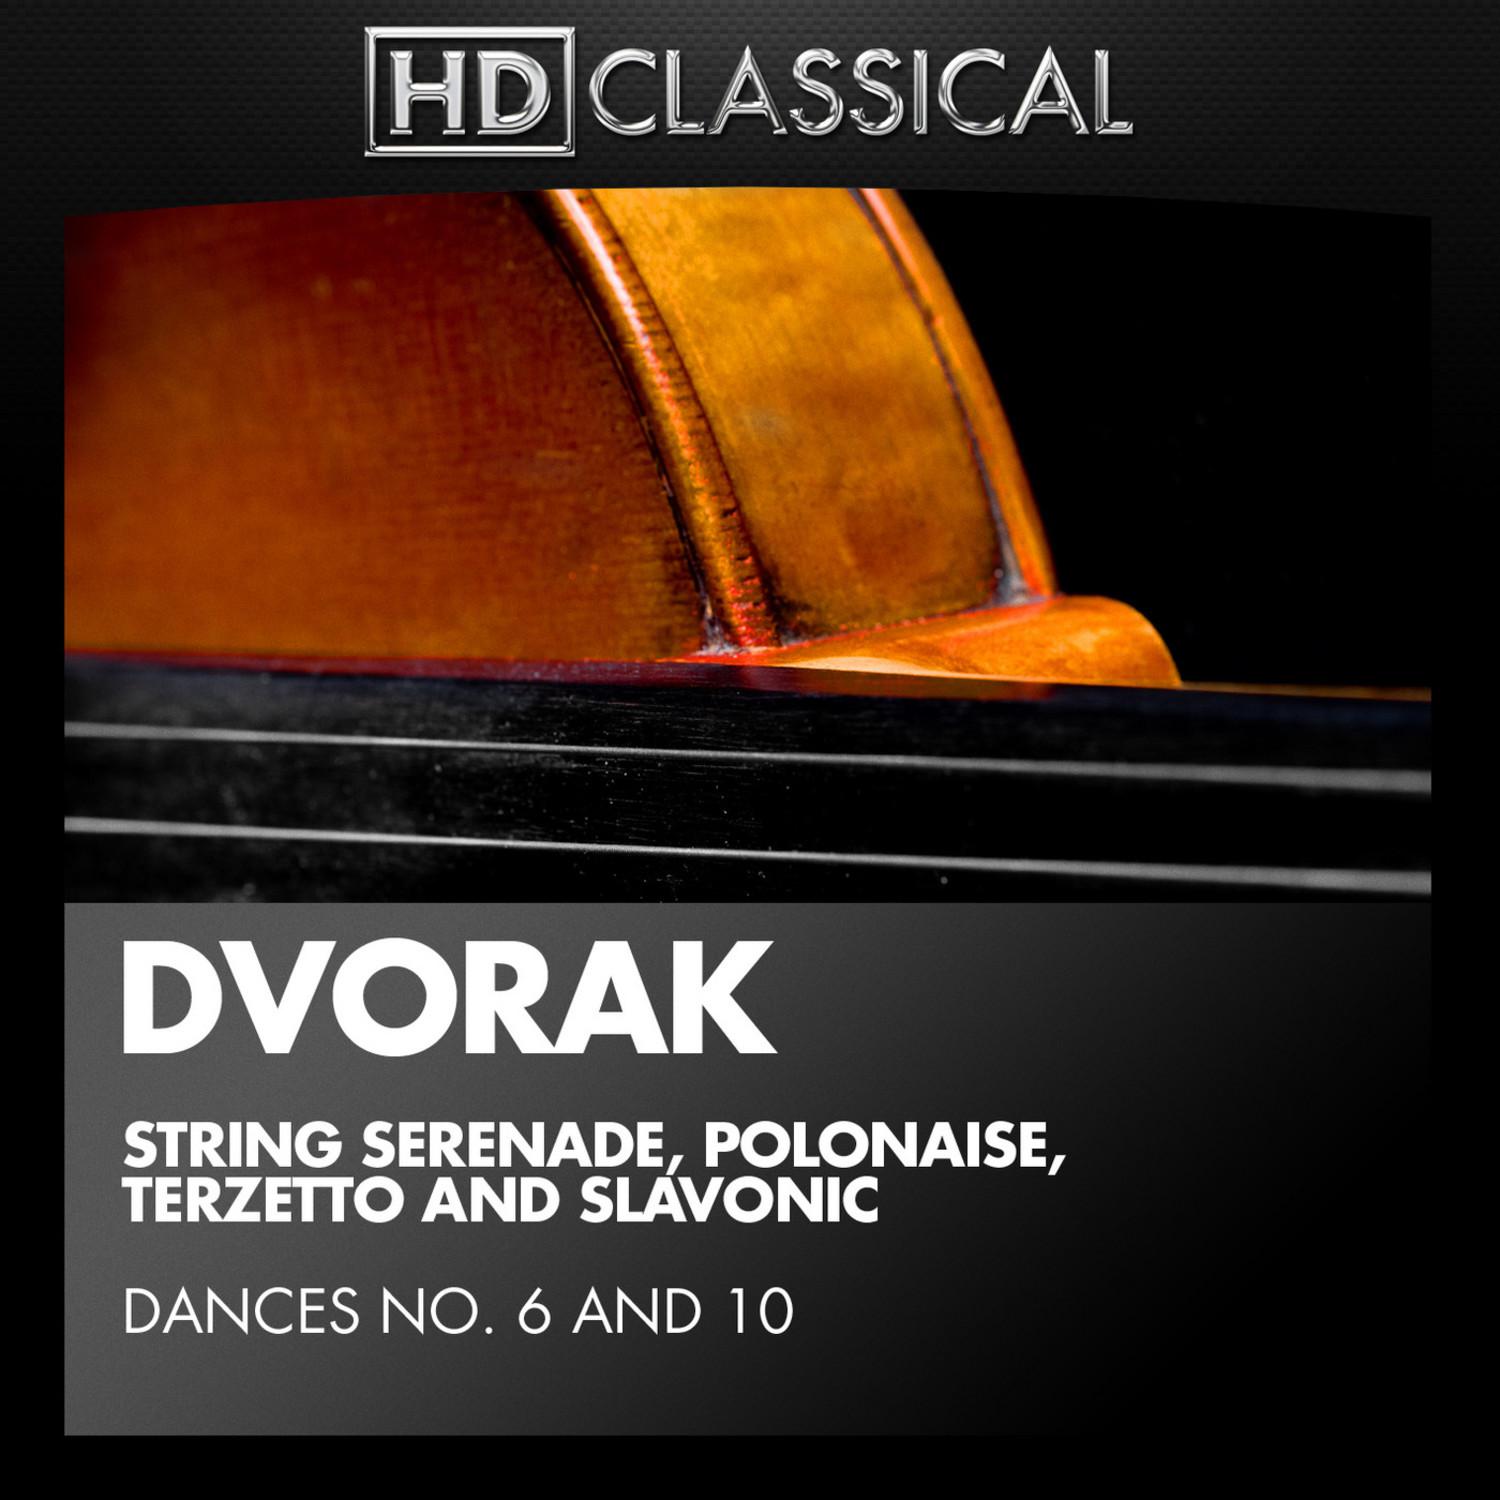 Dvora k: String Serenade, Polonaise, Terzetto and Slavonic Dances No. 6 and 10